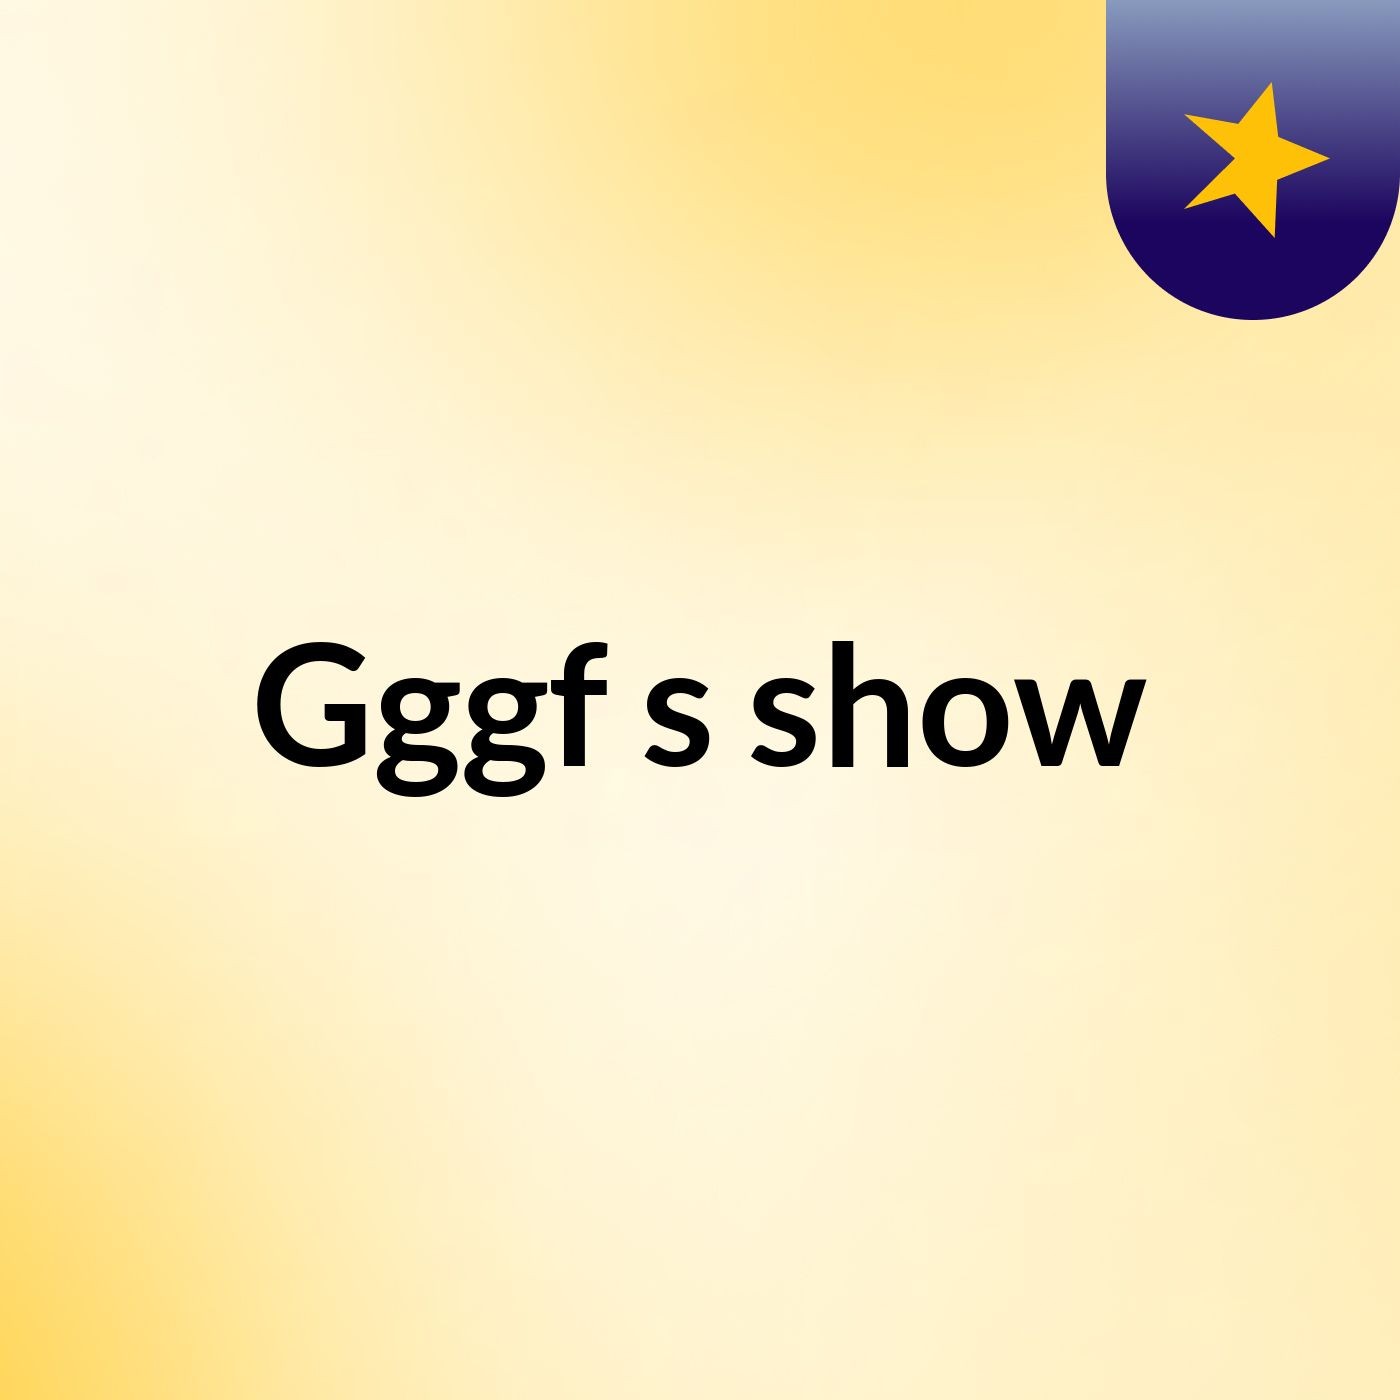 Gggf's show